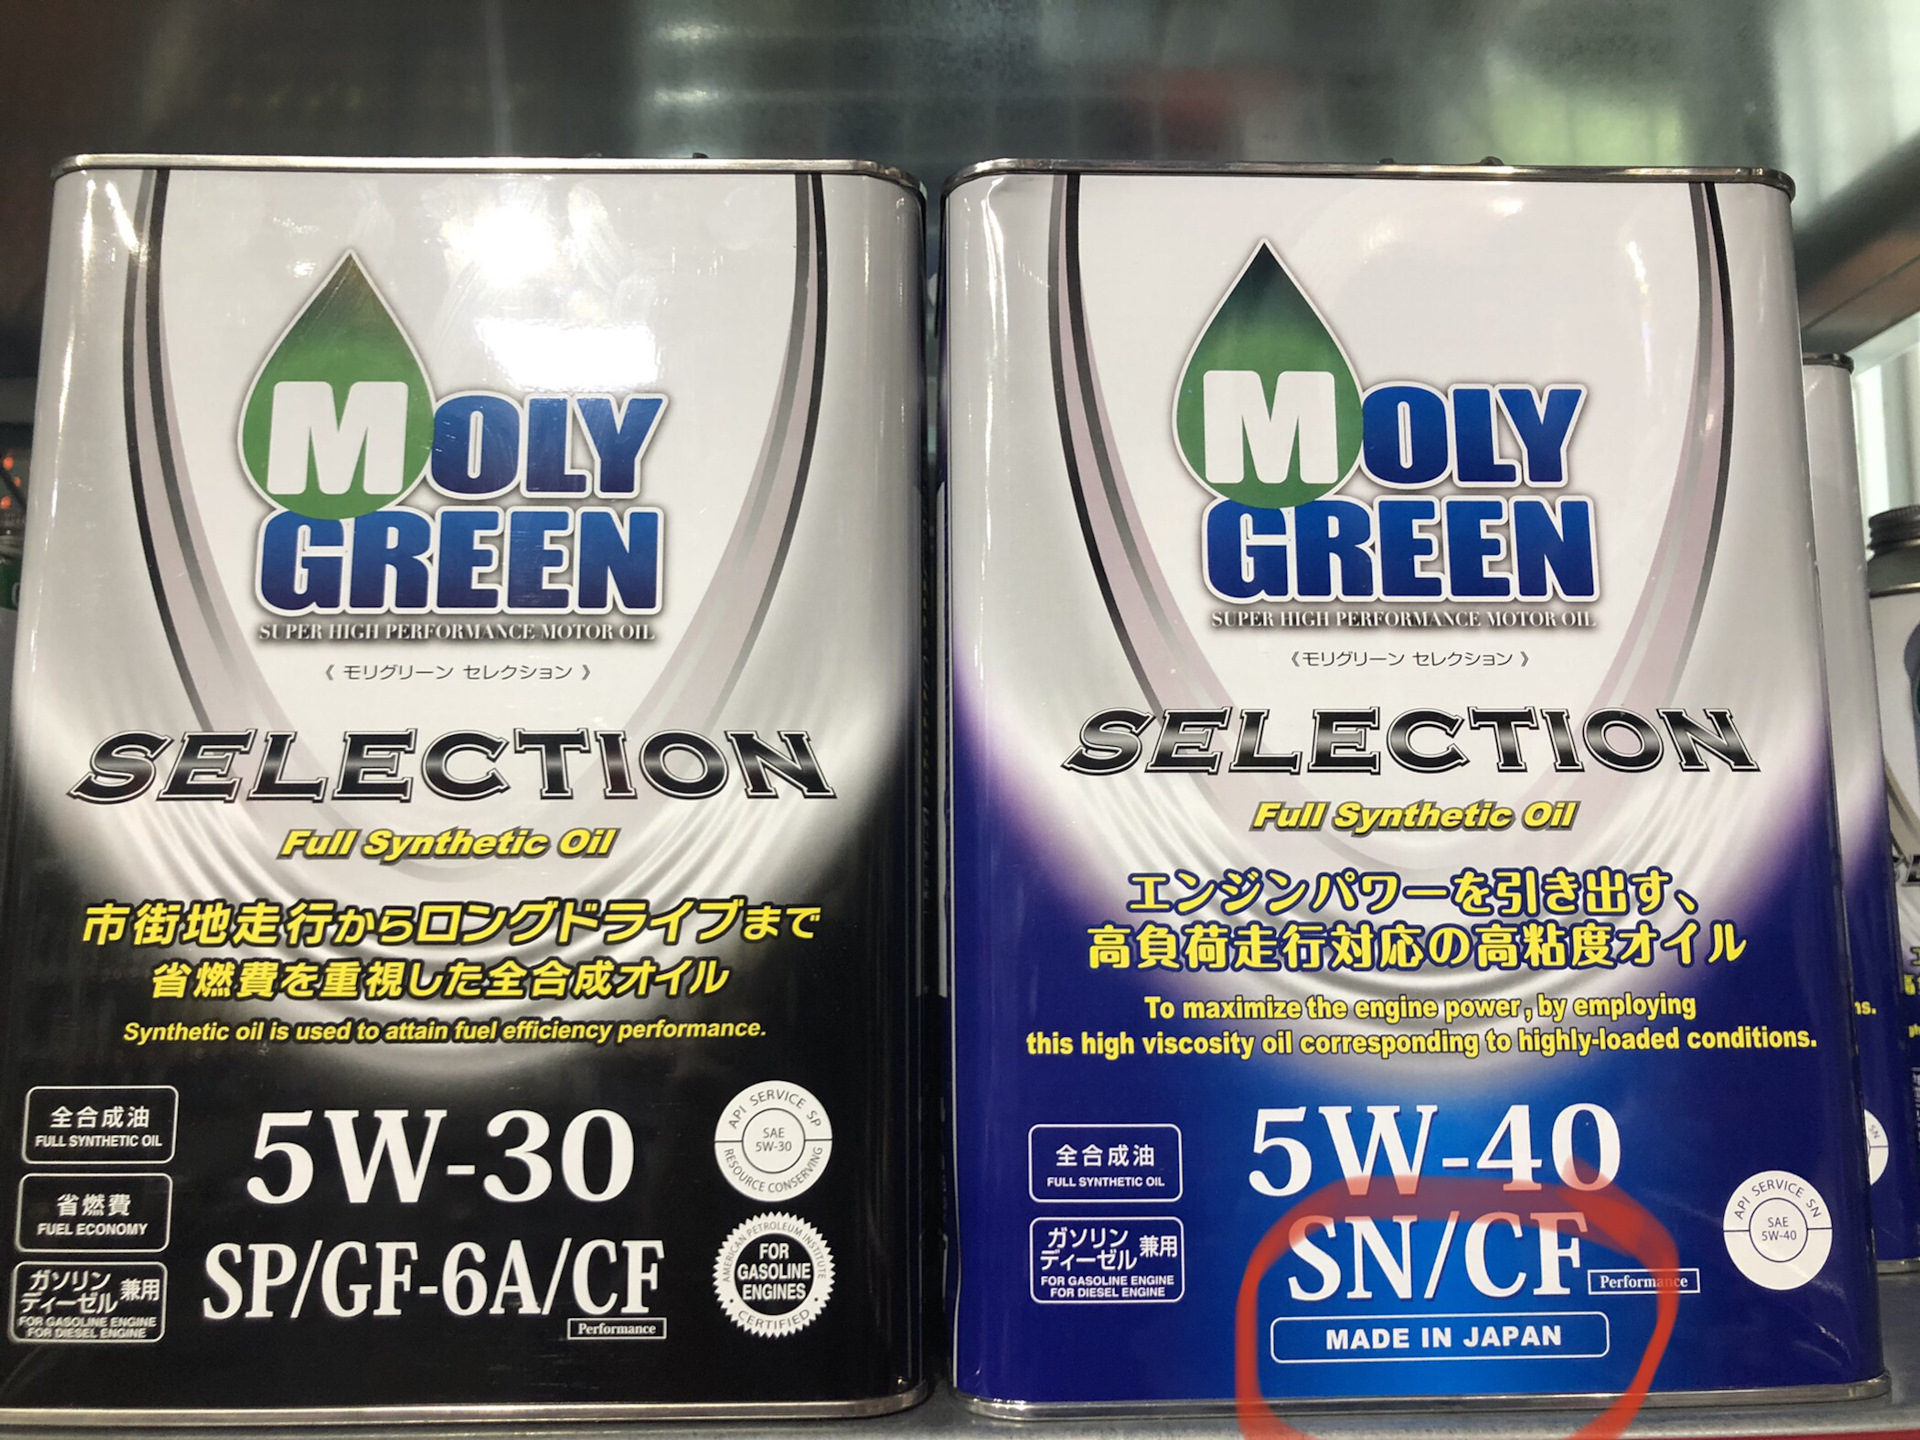 Моли грин 5w30 купить. Moly Green selection 5w40. Moly Green 5w30 selection. Моторное масло 5w30 Molly Green selection. Moly Green selection 5w40 200л.